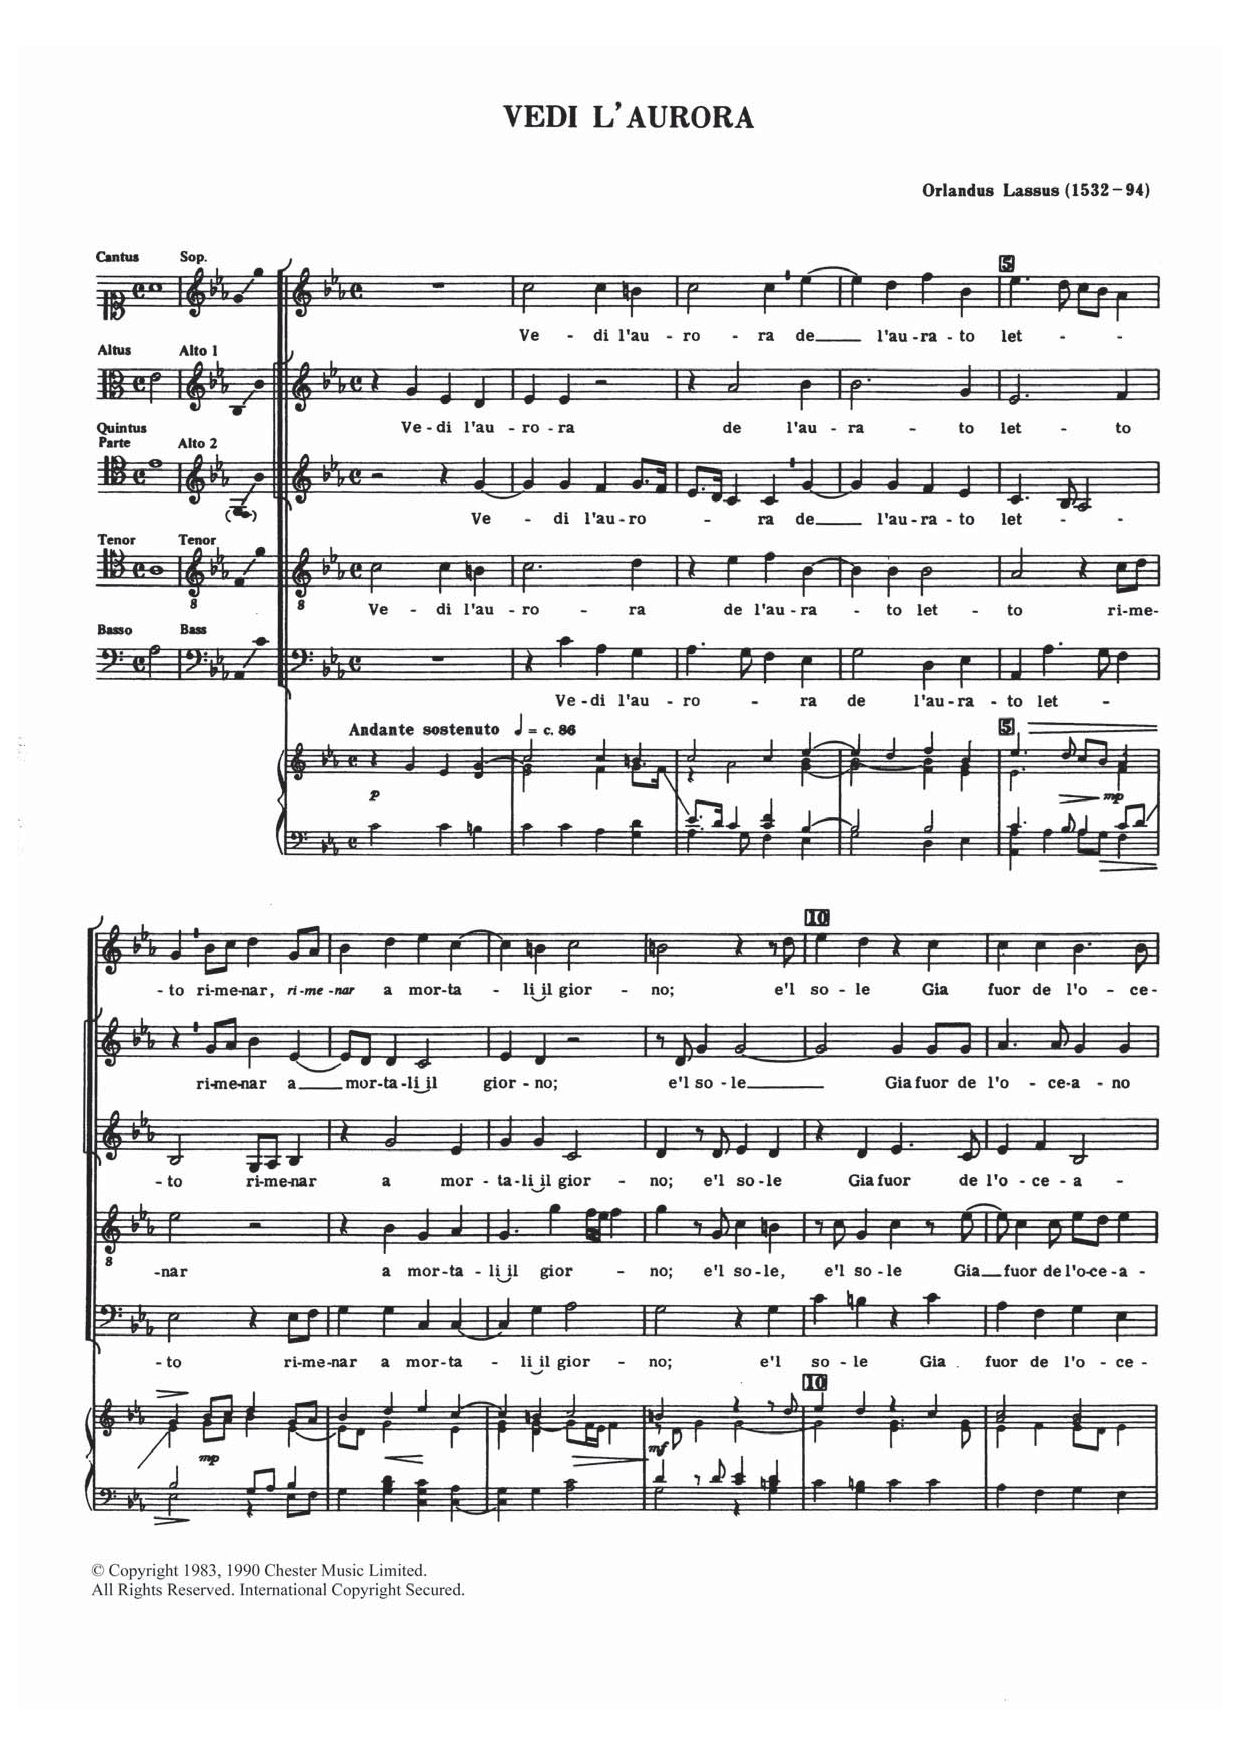 Orlandus Lassus Vedi L'aurora sheet music notes and chords arranged for Choir